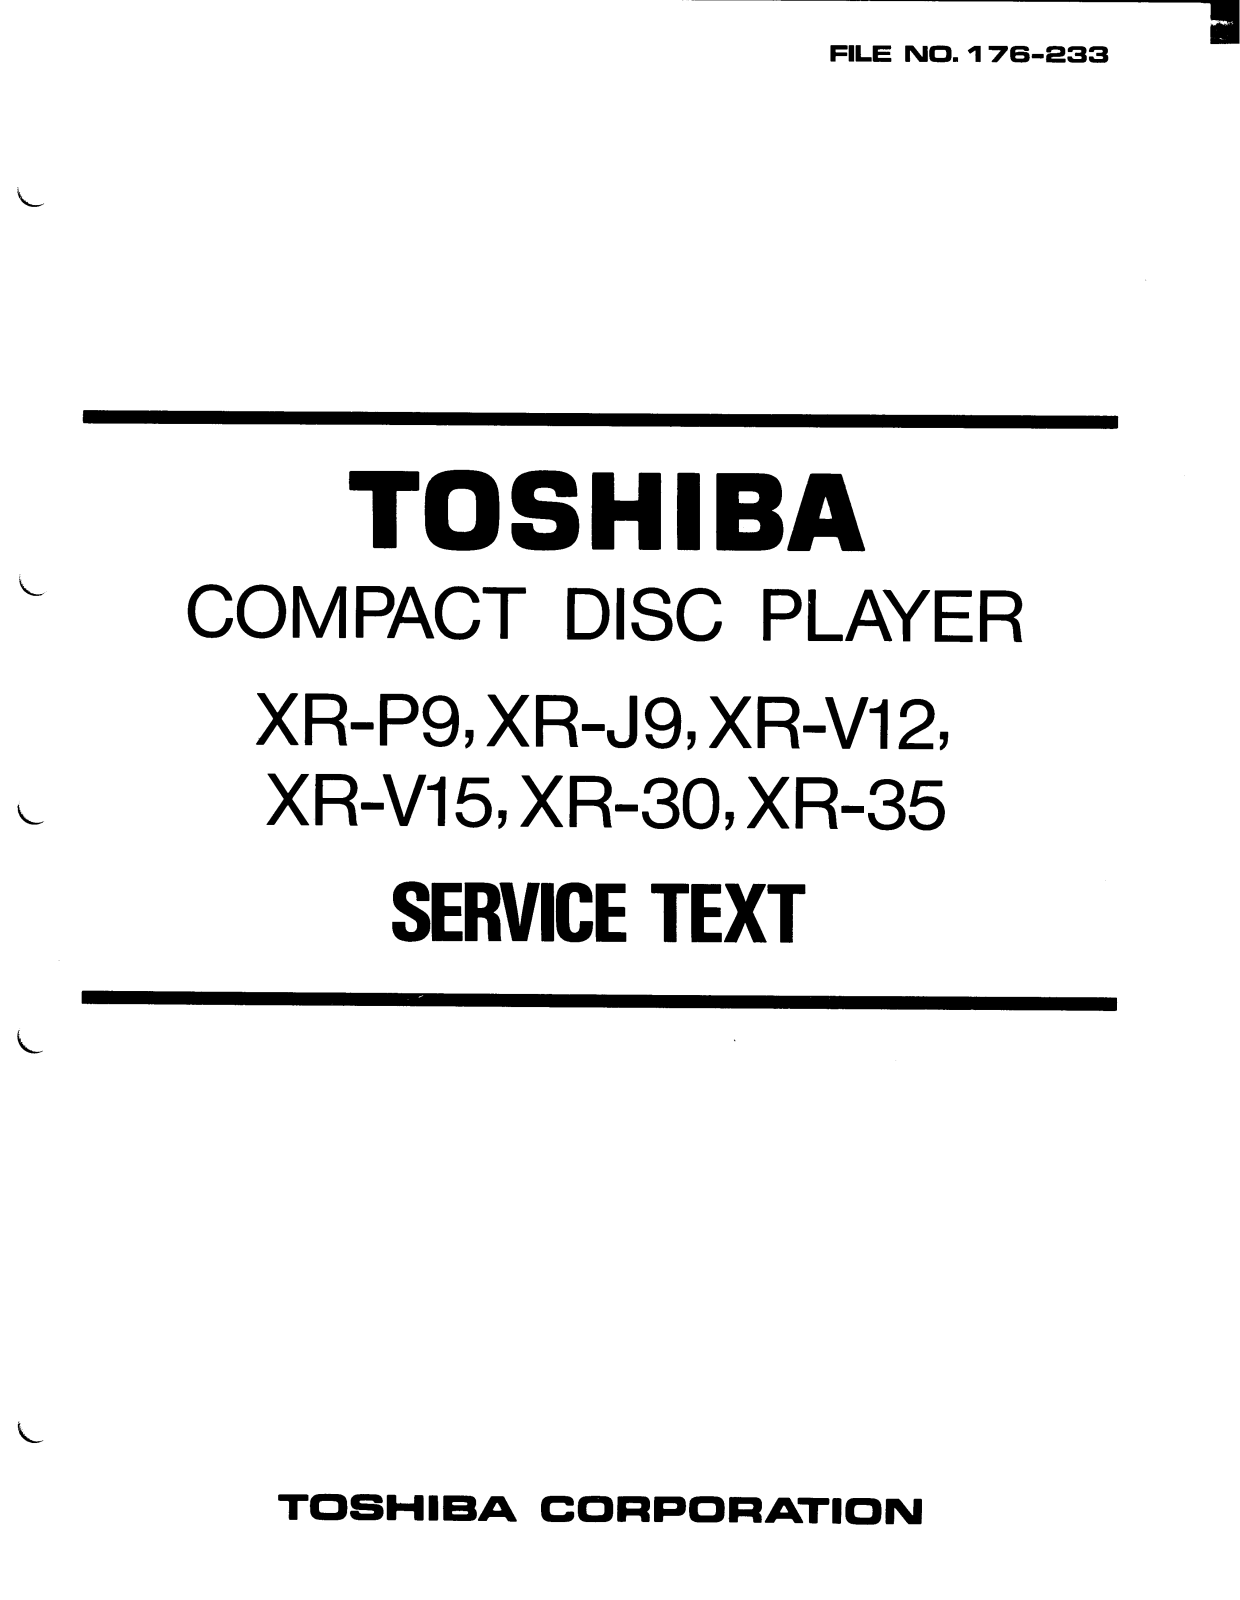 Toshiba xr-p9, xr-j9, xr-v12, xr-v15, xr-30 Service Manual